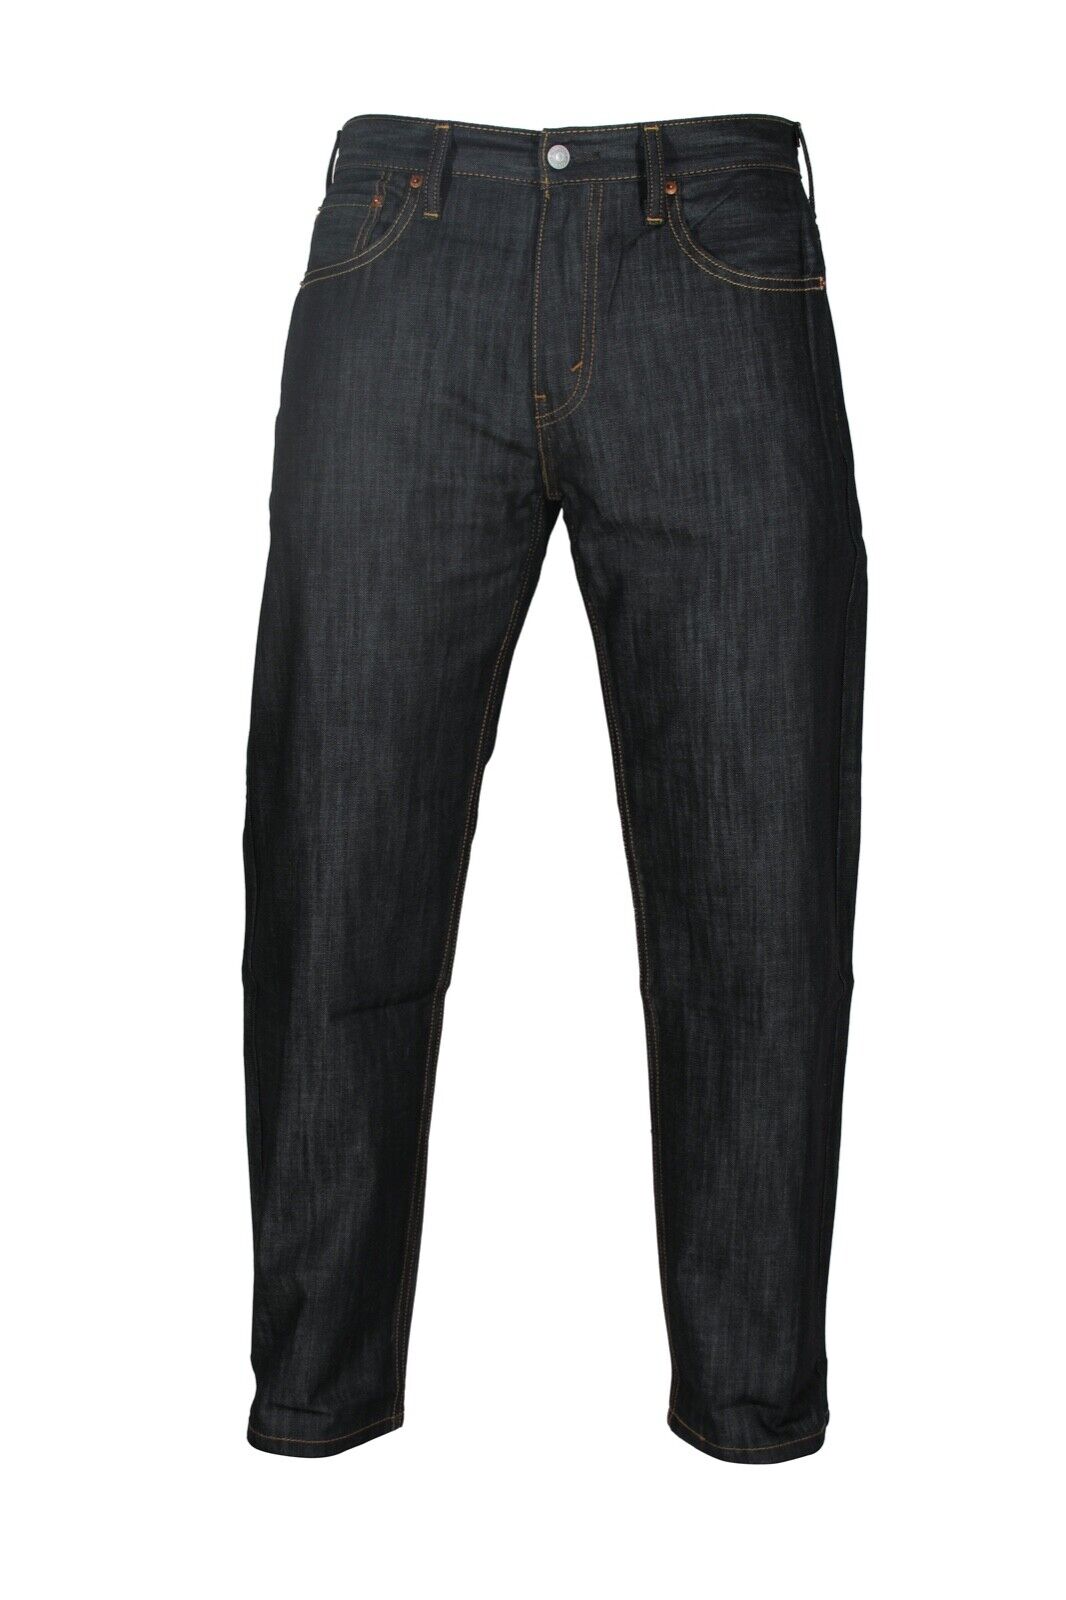 Levi's 569 Loose Straight Fit Men's Jeans Ice Cap 00569-0127 | eBay